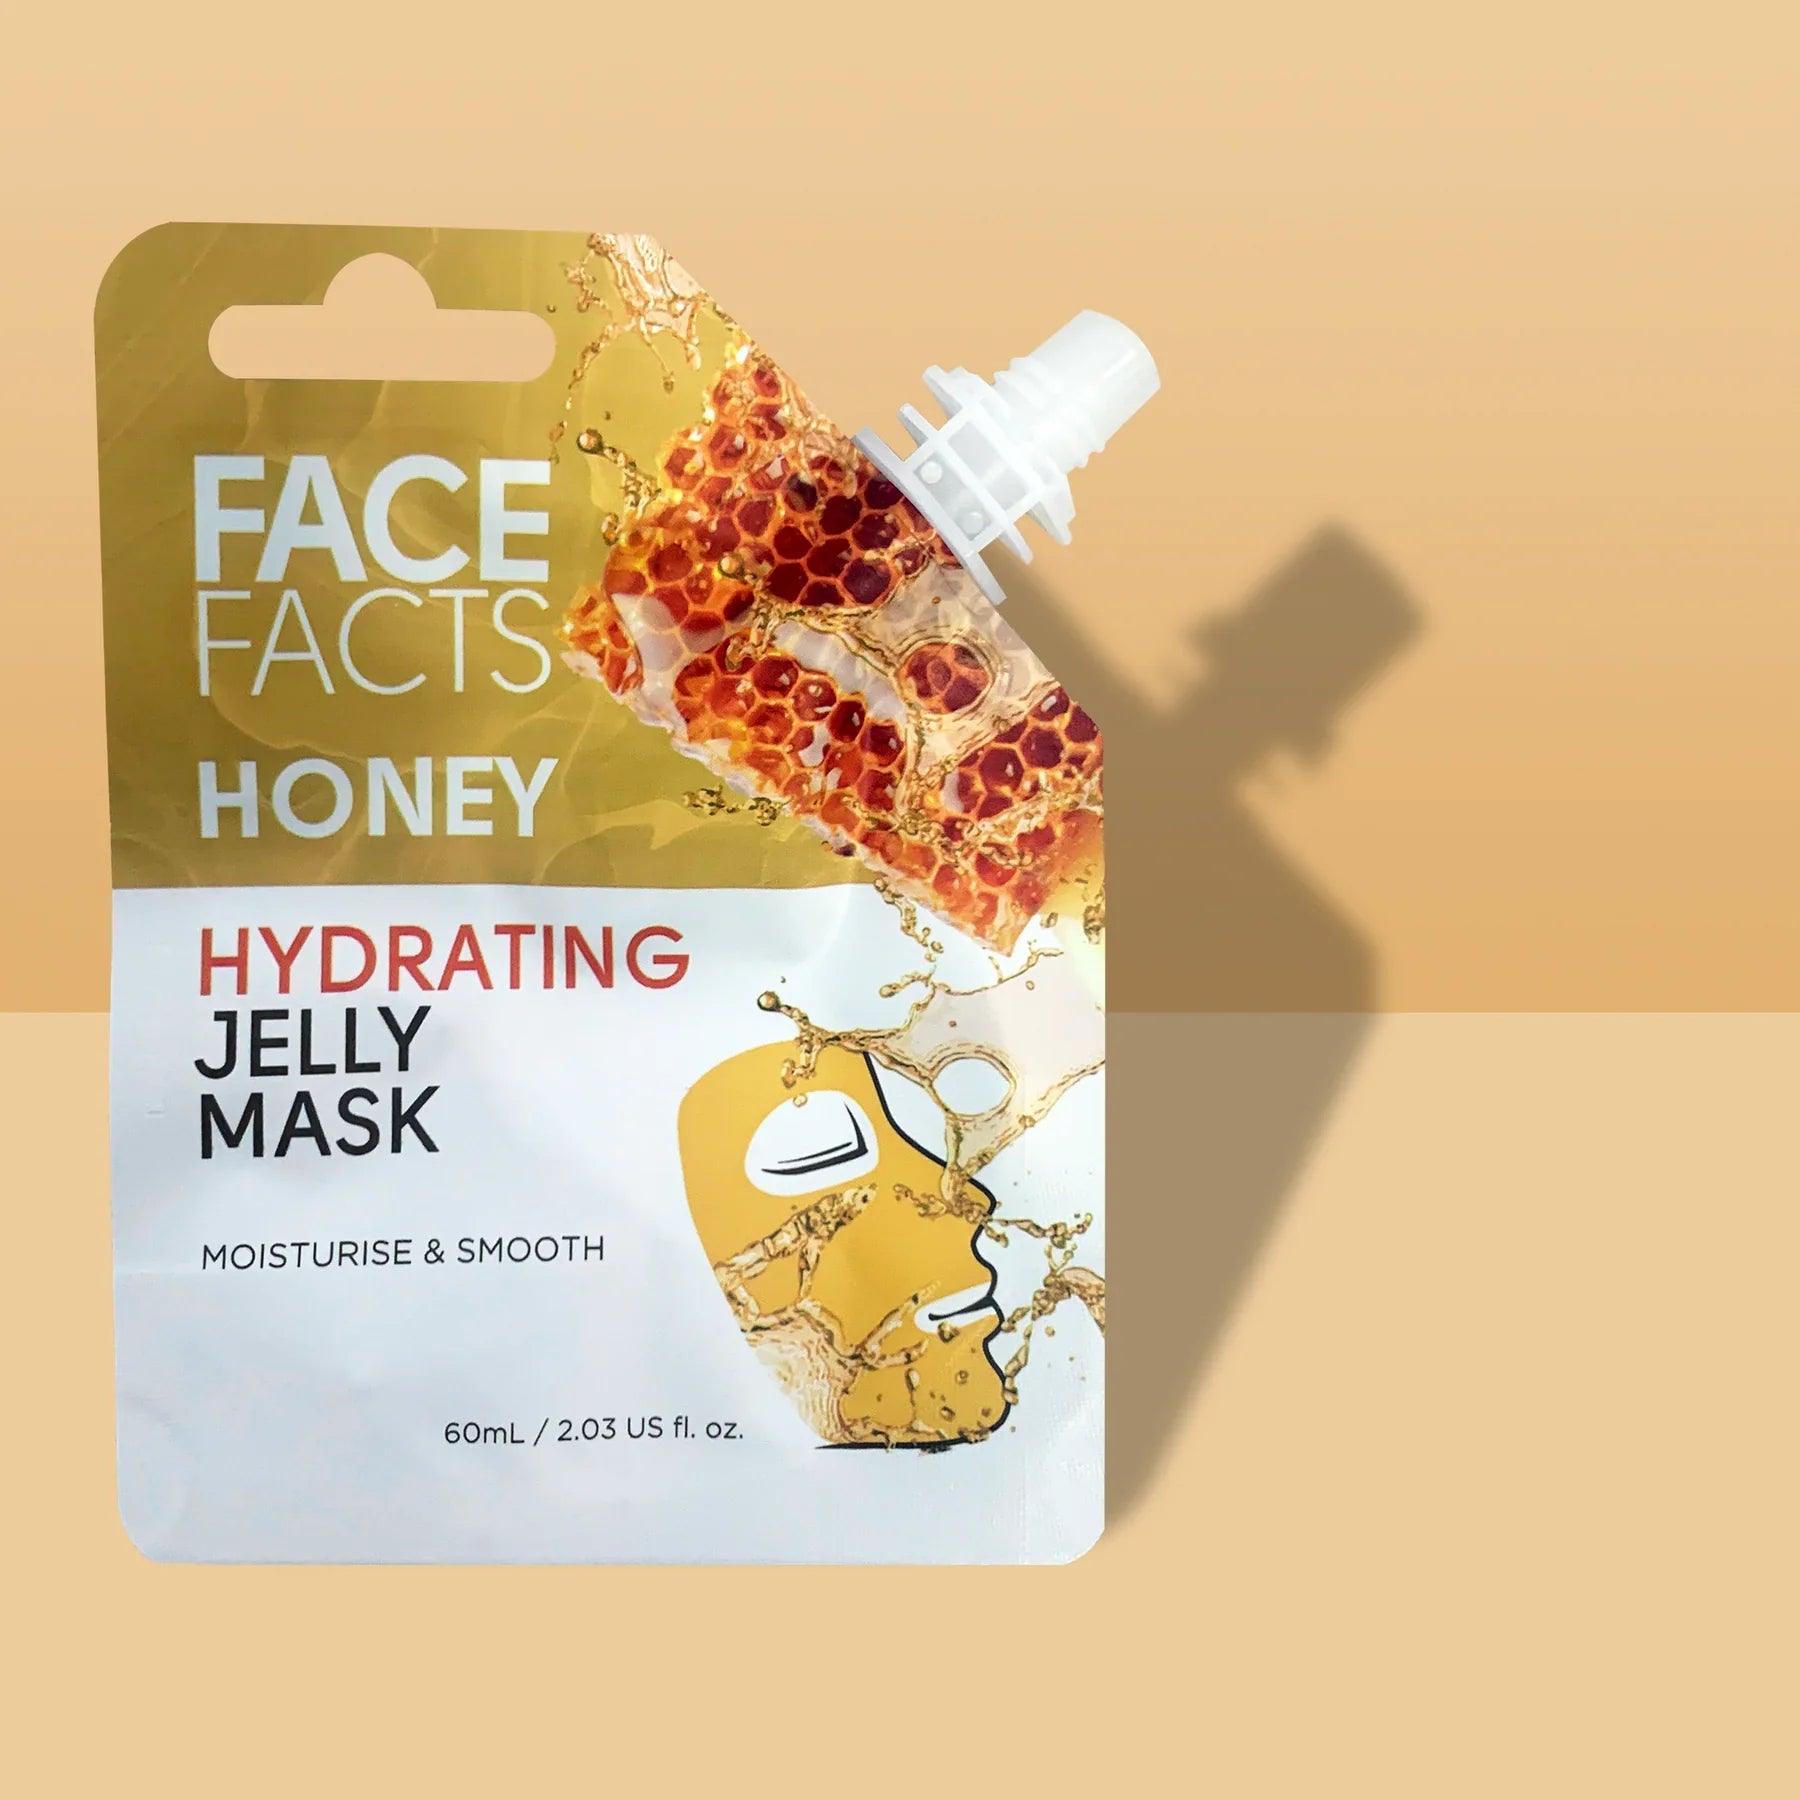 Hydrating Honey Jelly Face Mask